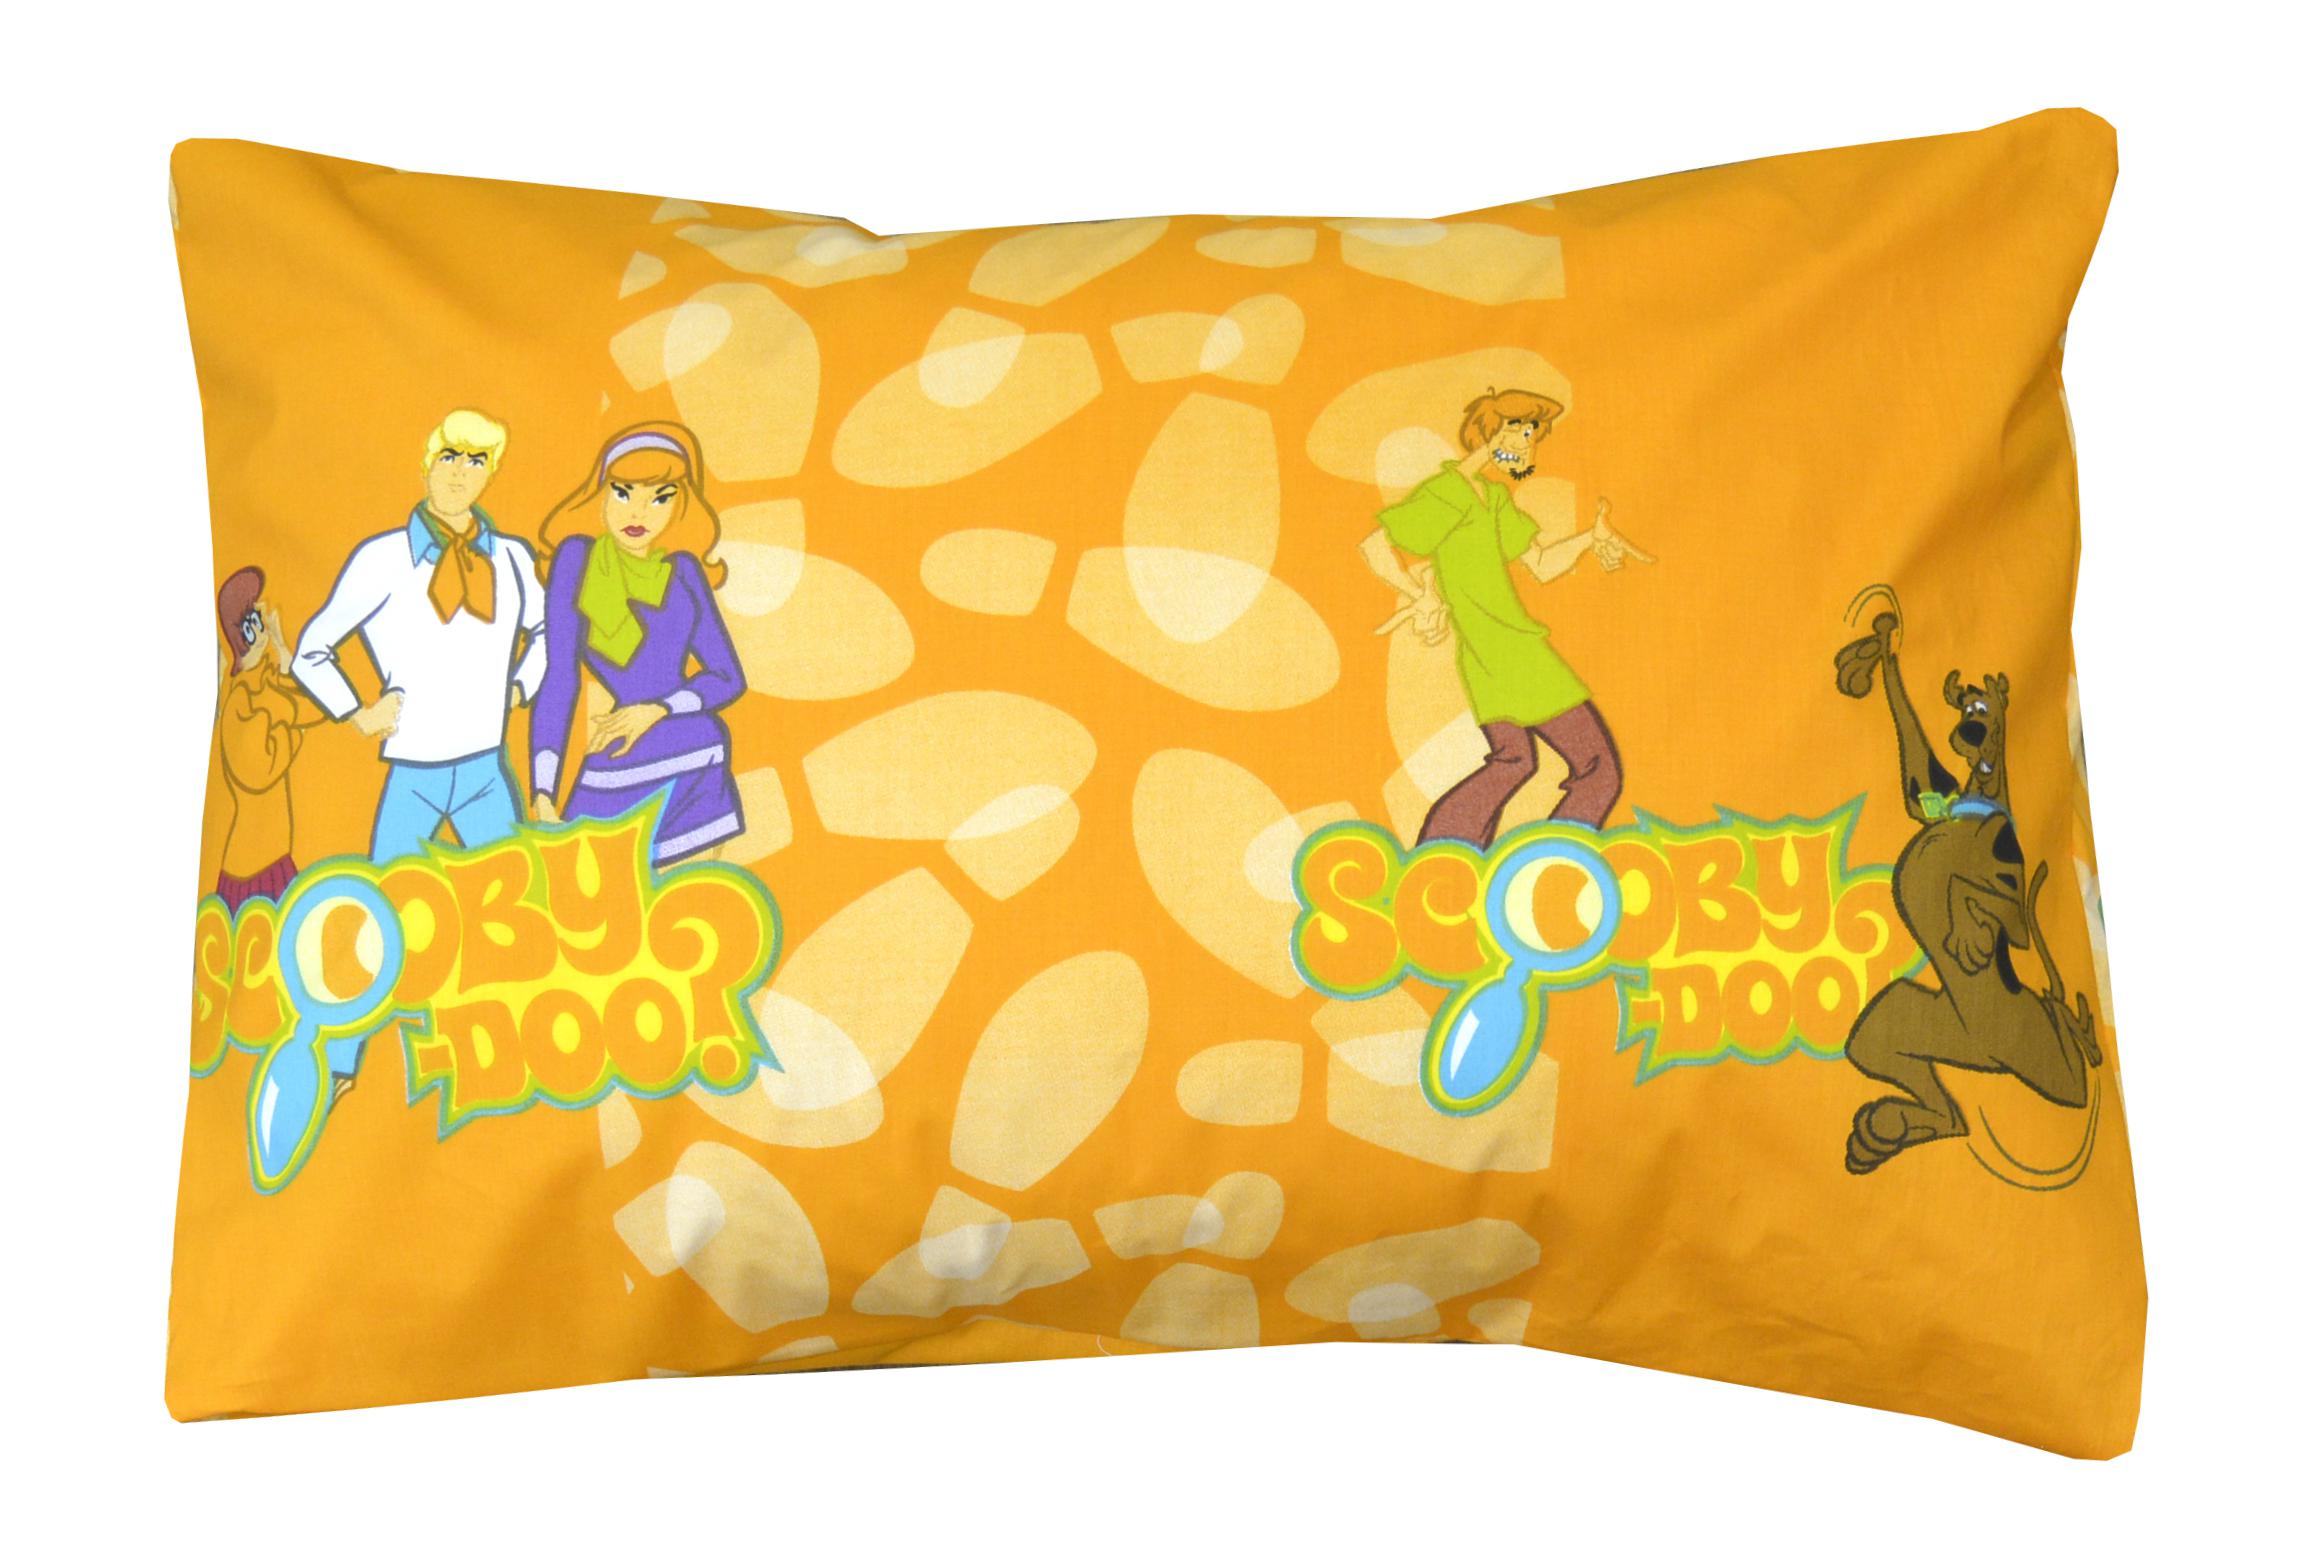 Viopros Ζεύγος Μαξιλαροθήκες 50×70 Scooby Doo 30 Πορτοκαλί